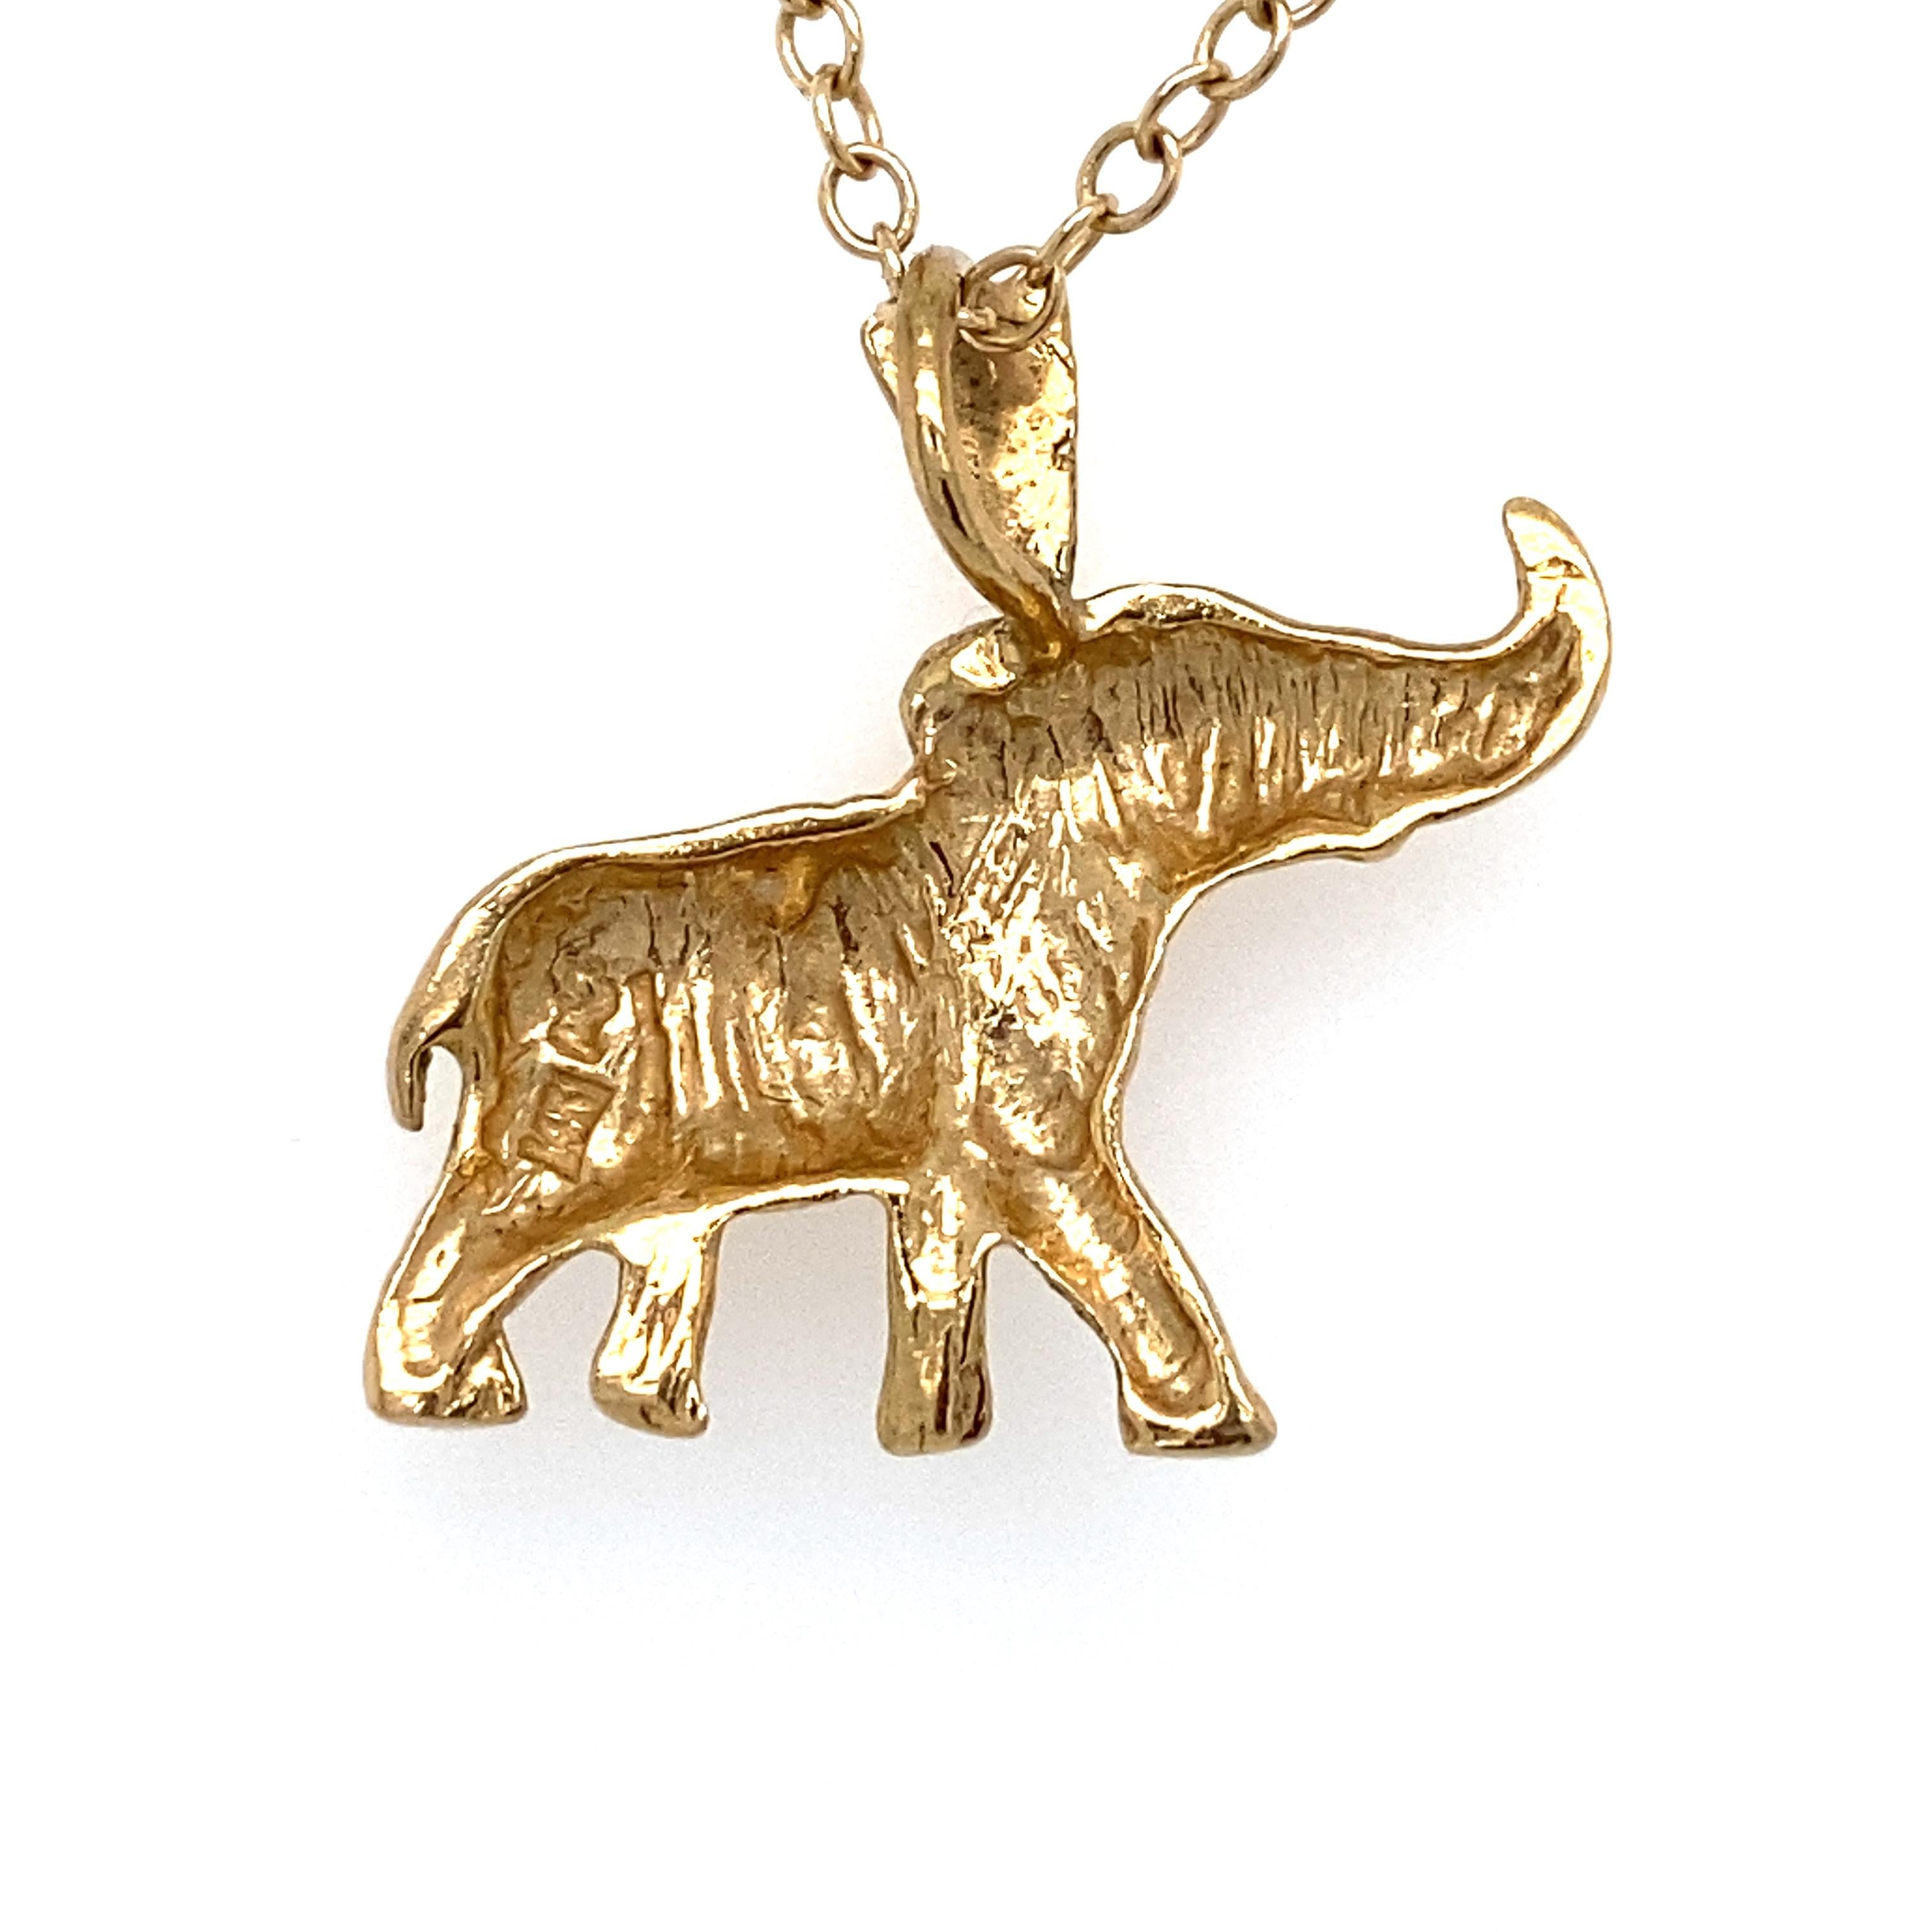 10k gold elephant pendant